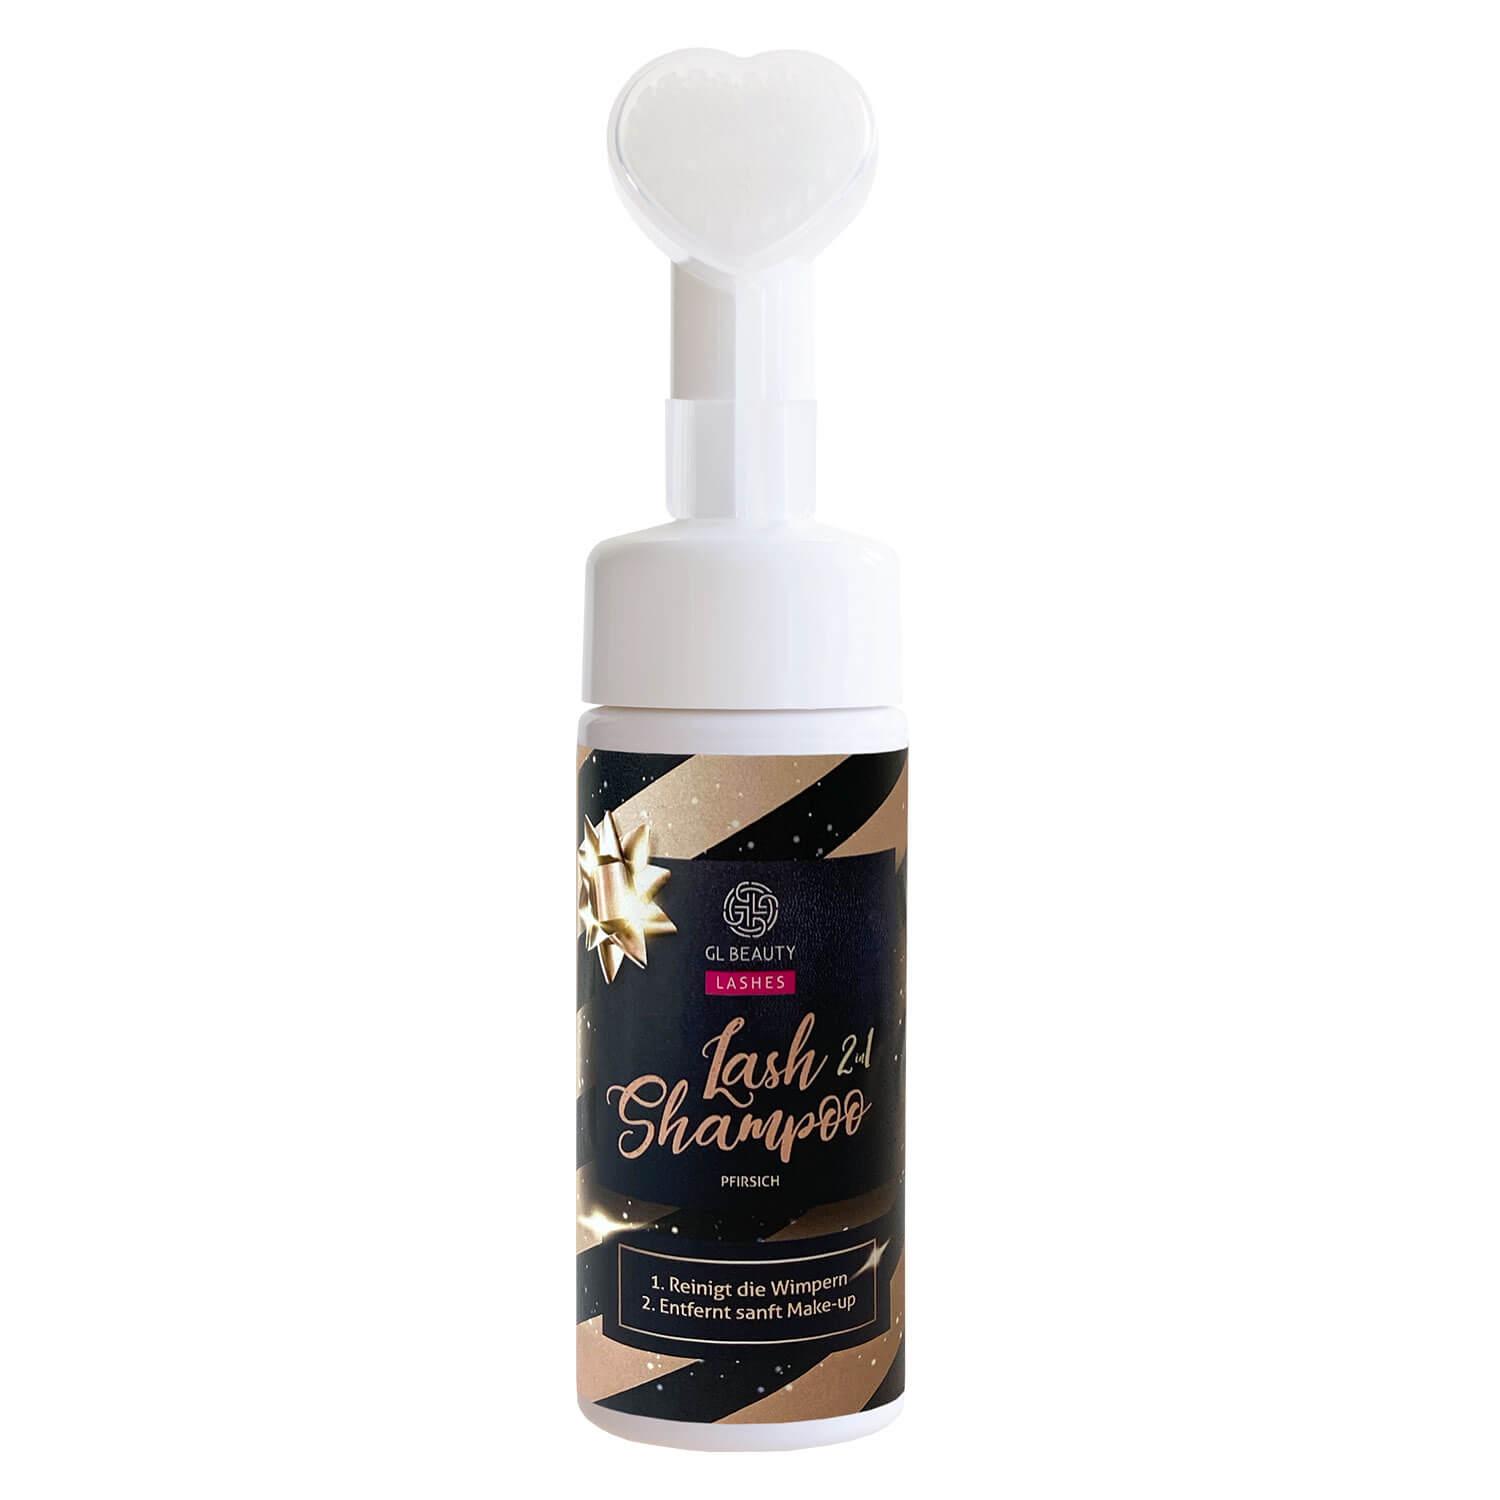 GL Beautycompany - Lash Shampoo 2in1 Peach Limited Edition